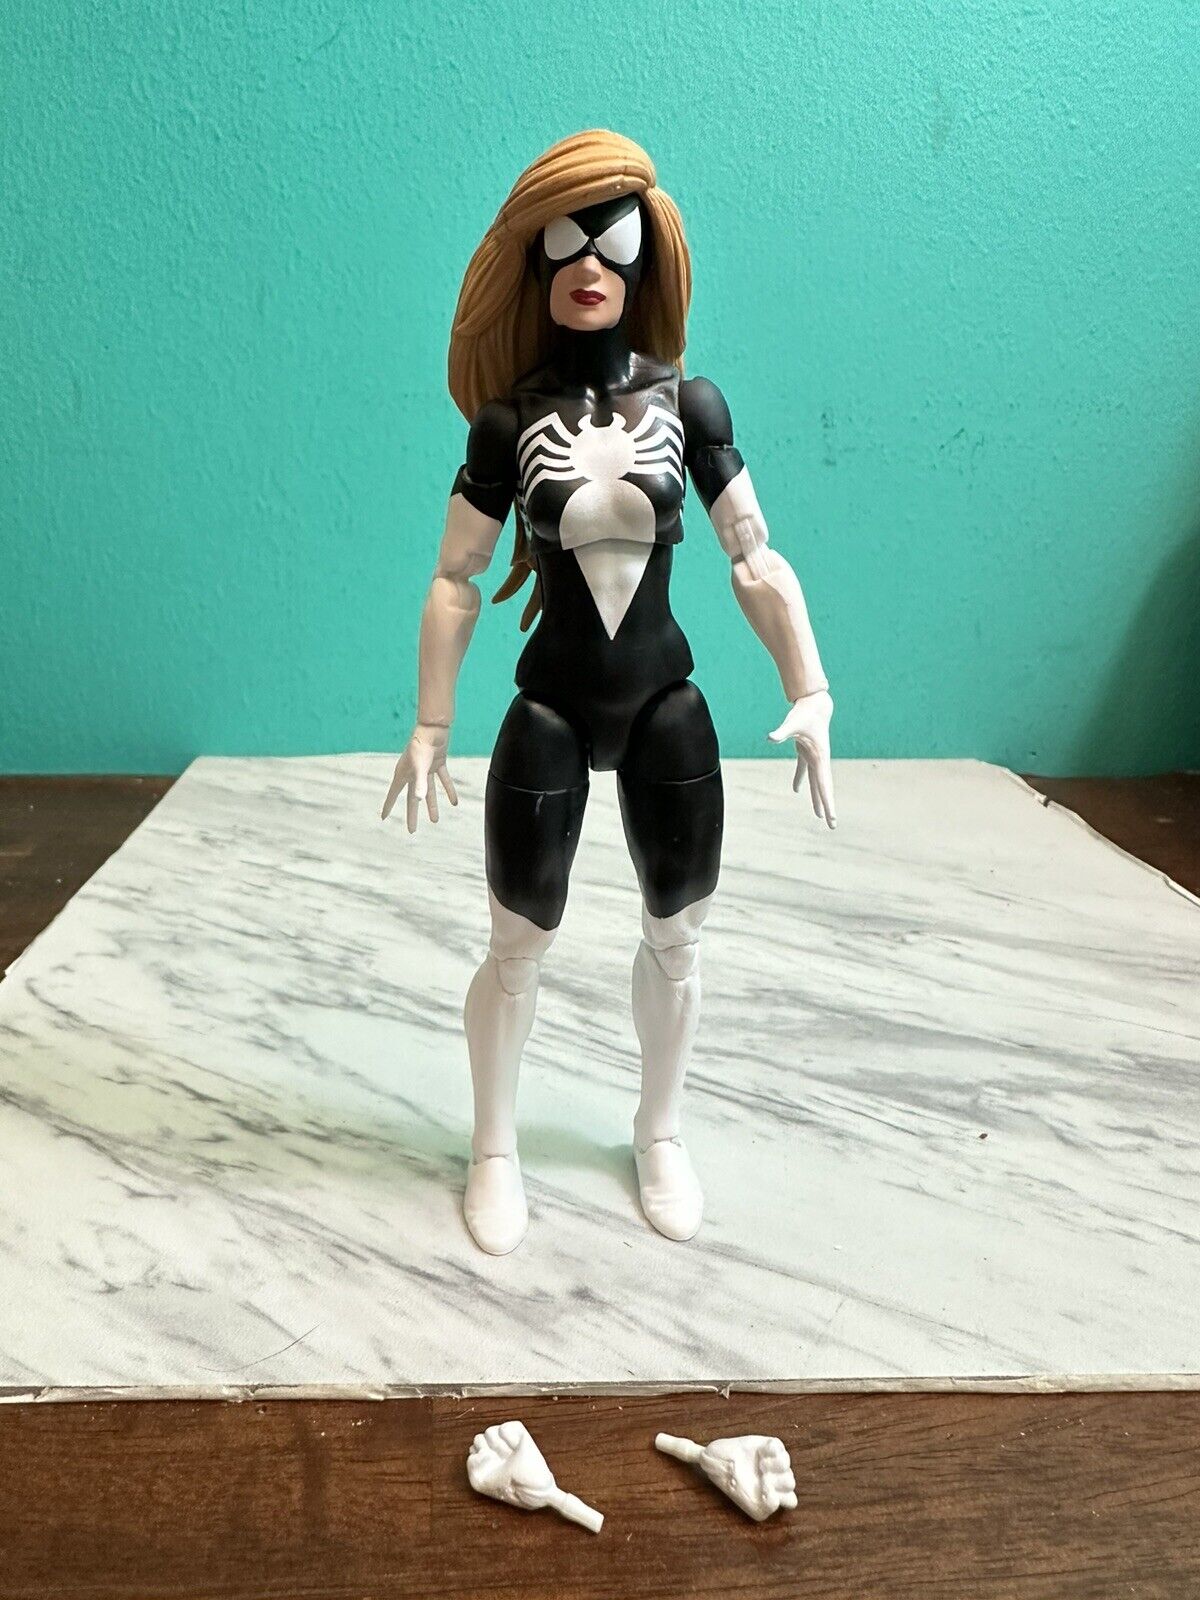 Unbelievable Marvel Legends SPIDER-WOMAN 6″ Figure West Coast Avengers Amazon Exclusive on eBay